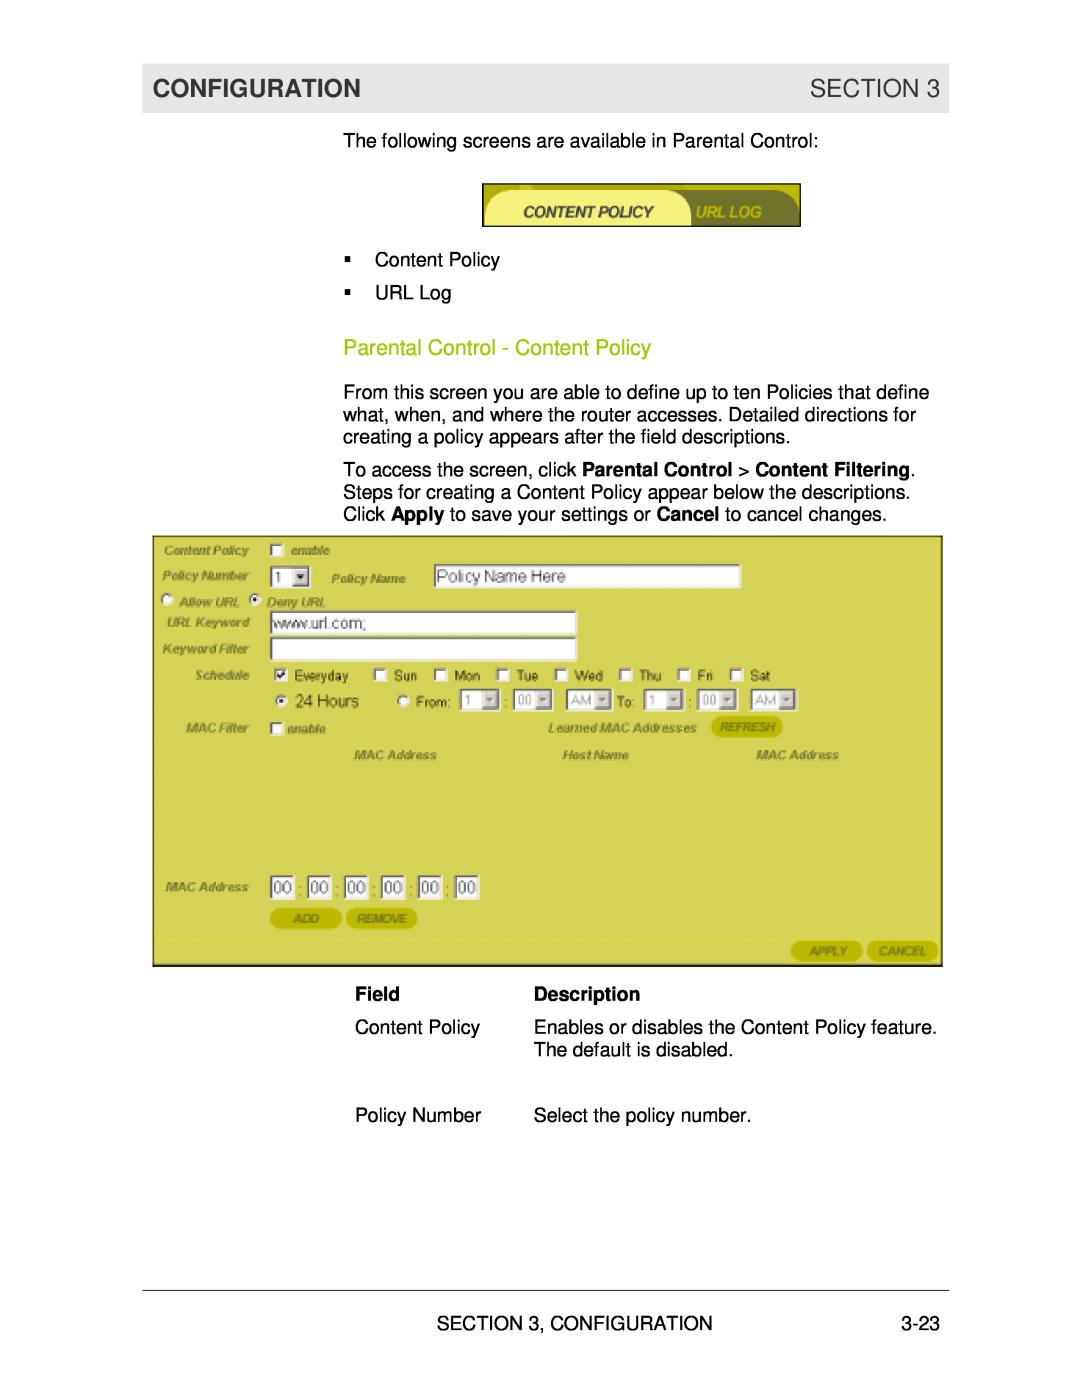 Motorola WR850G manual Parental Control - Content Policy, Configuration, Section, Field, Description 